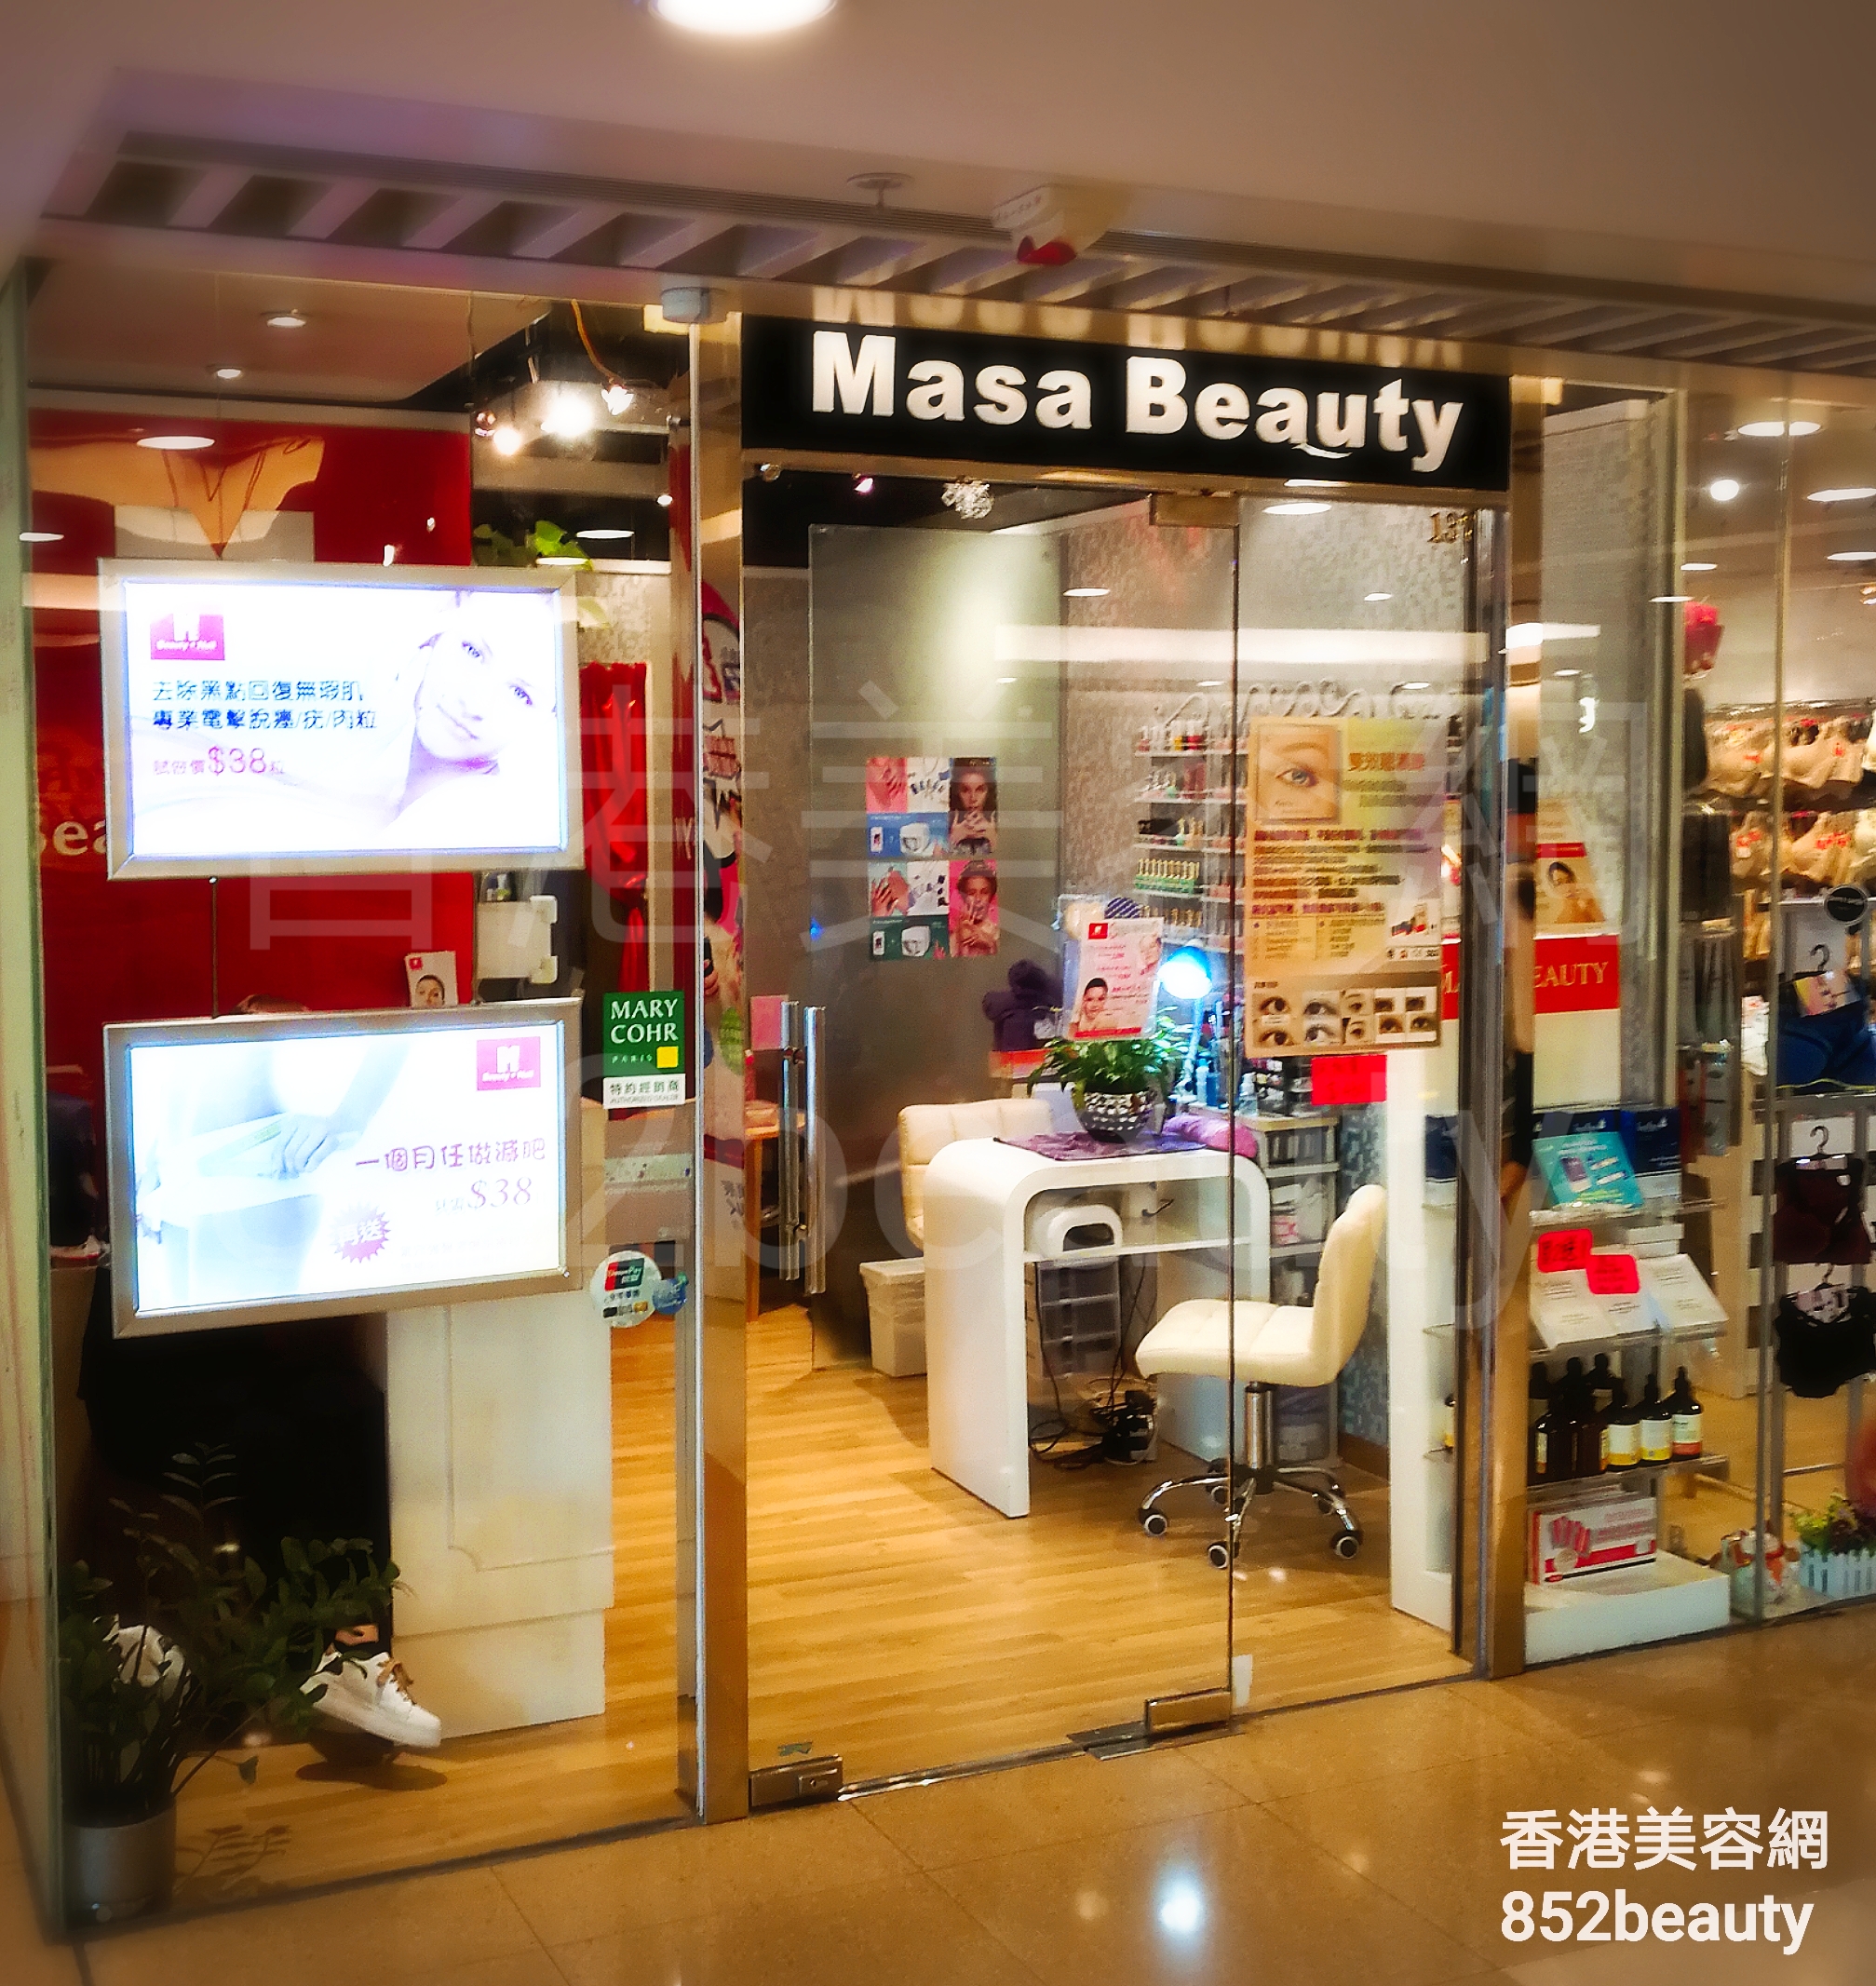 香港美容網 Hong Kong Beauty Salon 美容院 / 美容師: Masa Beauty